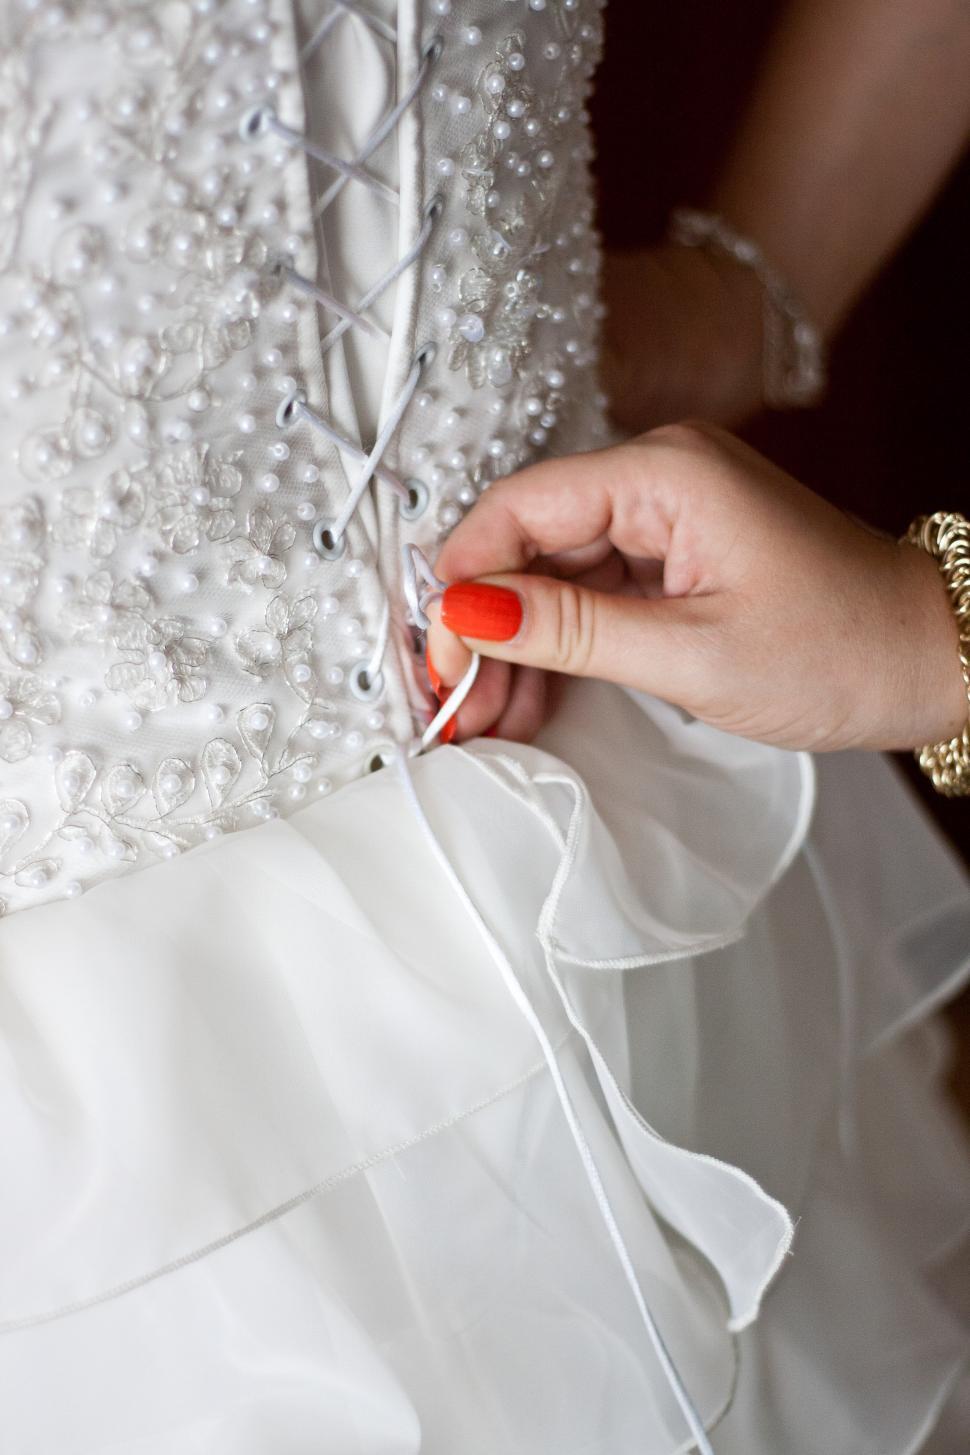 Free Image of Woman in White Dress Tying Wedding Dress 